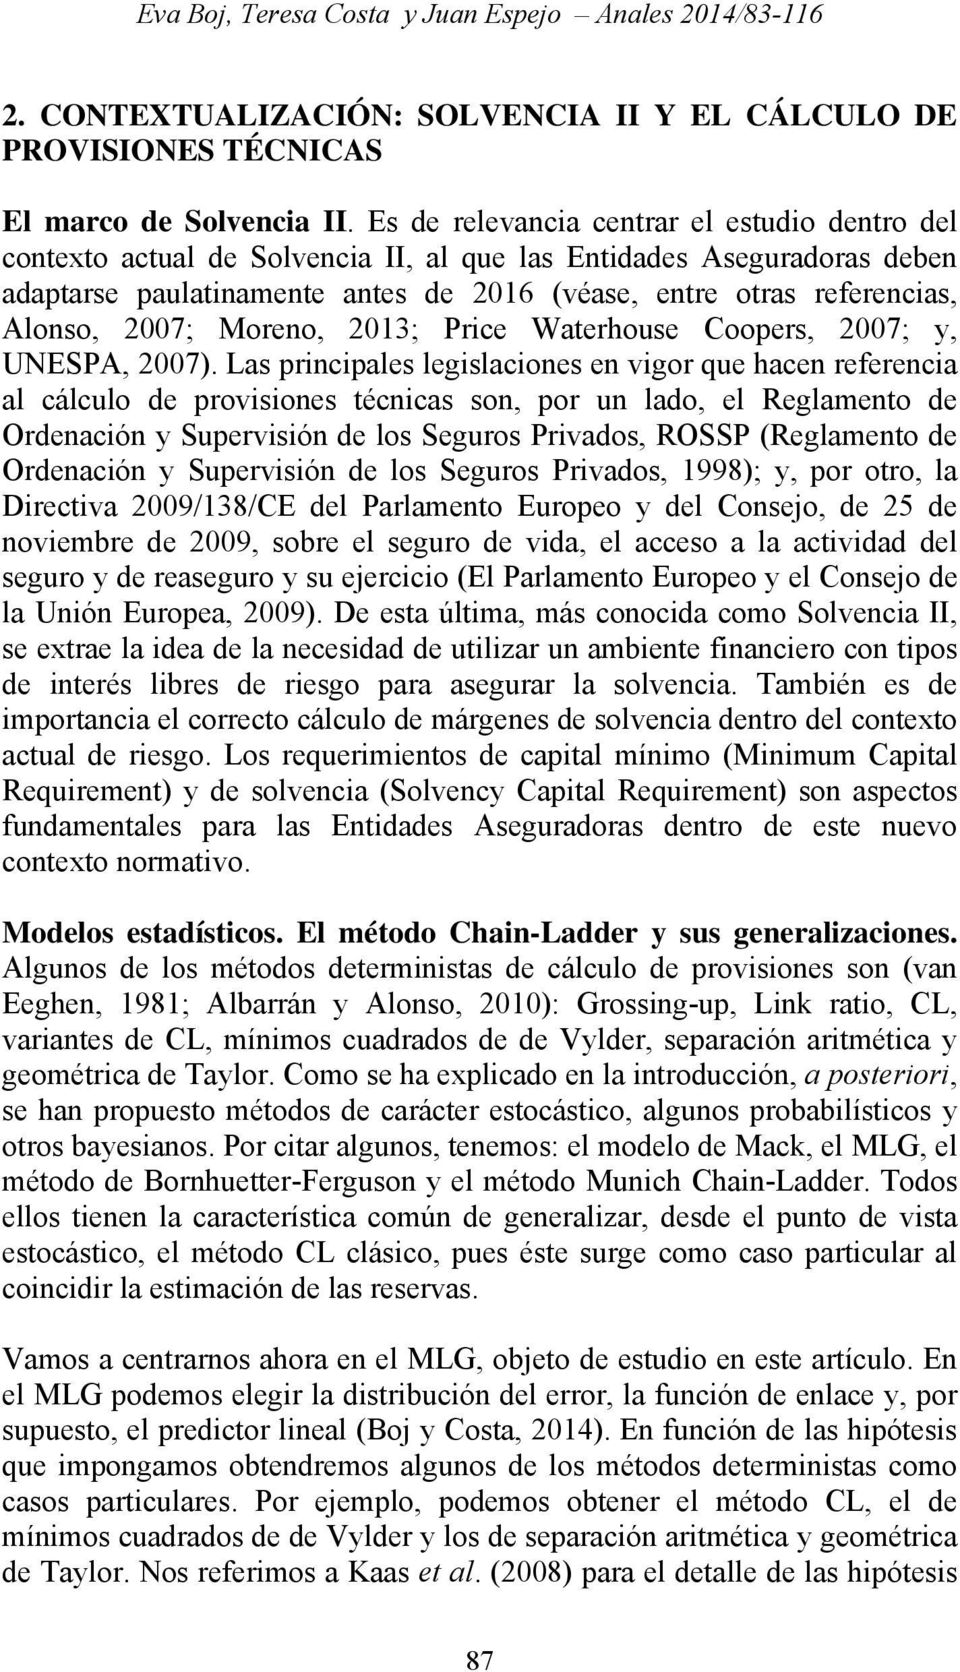 2007; Moreno, 2013; Price Waterhouse Coopers, 2007; y, UNESPA, 2007).